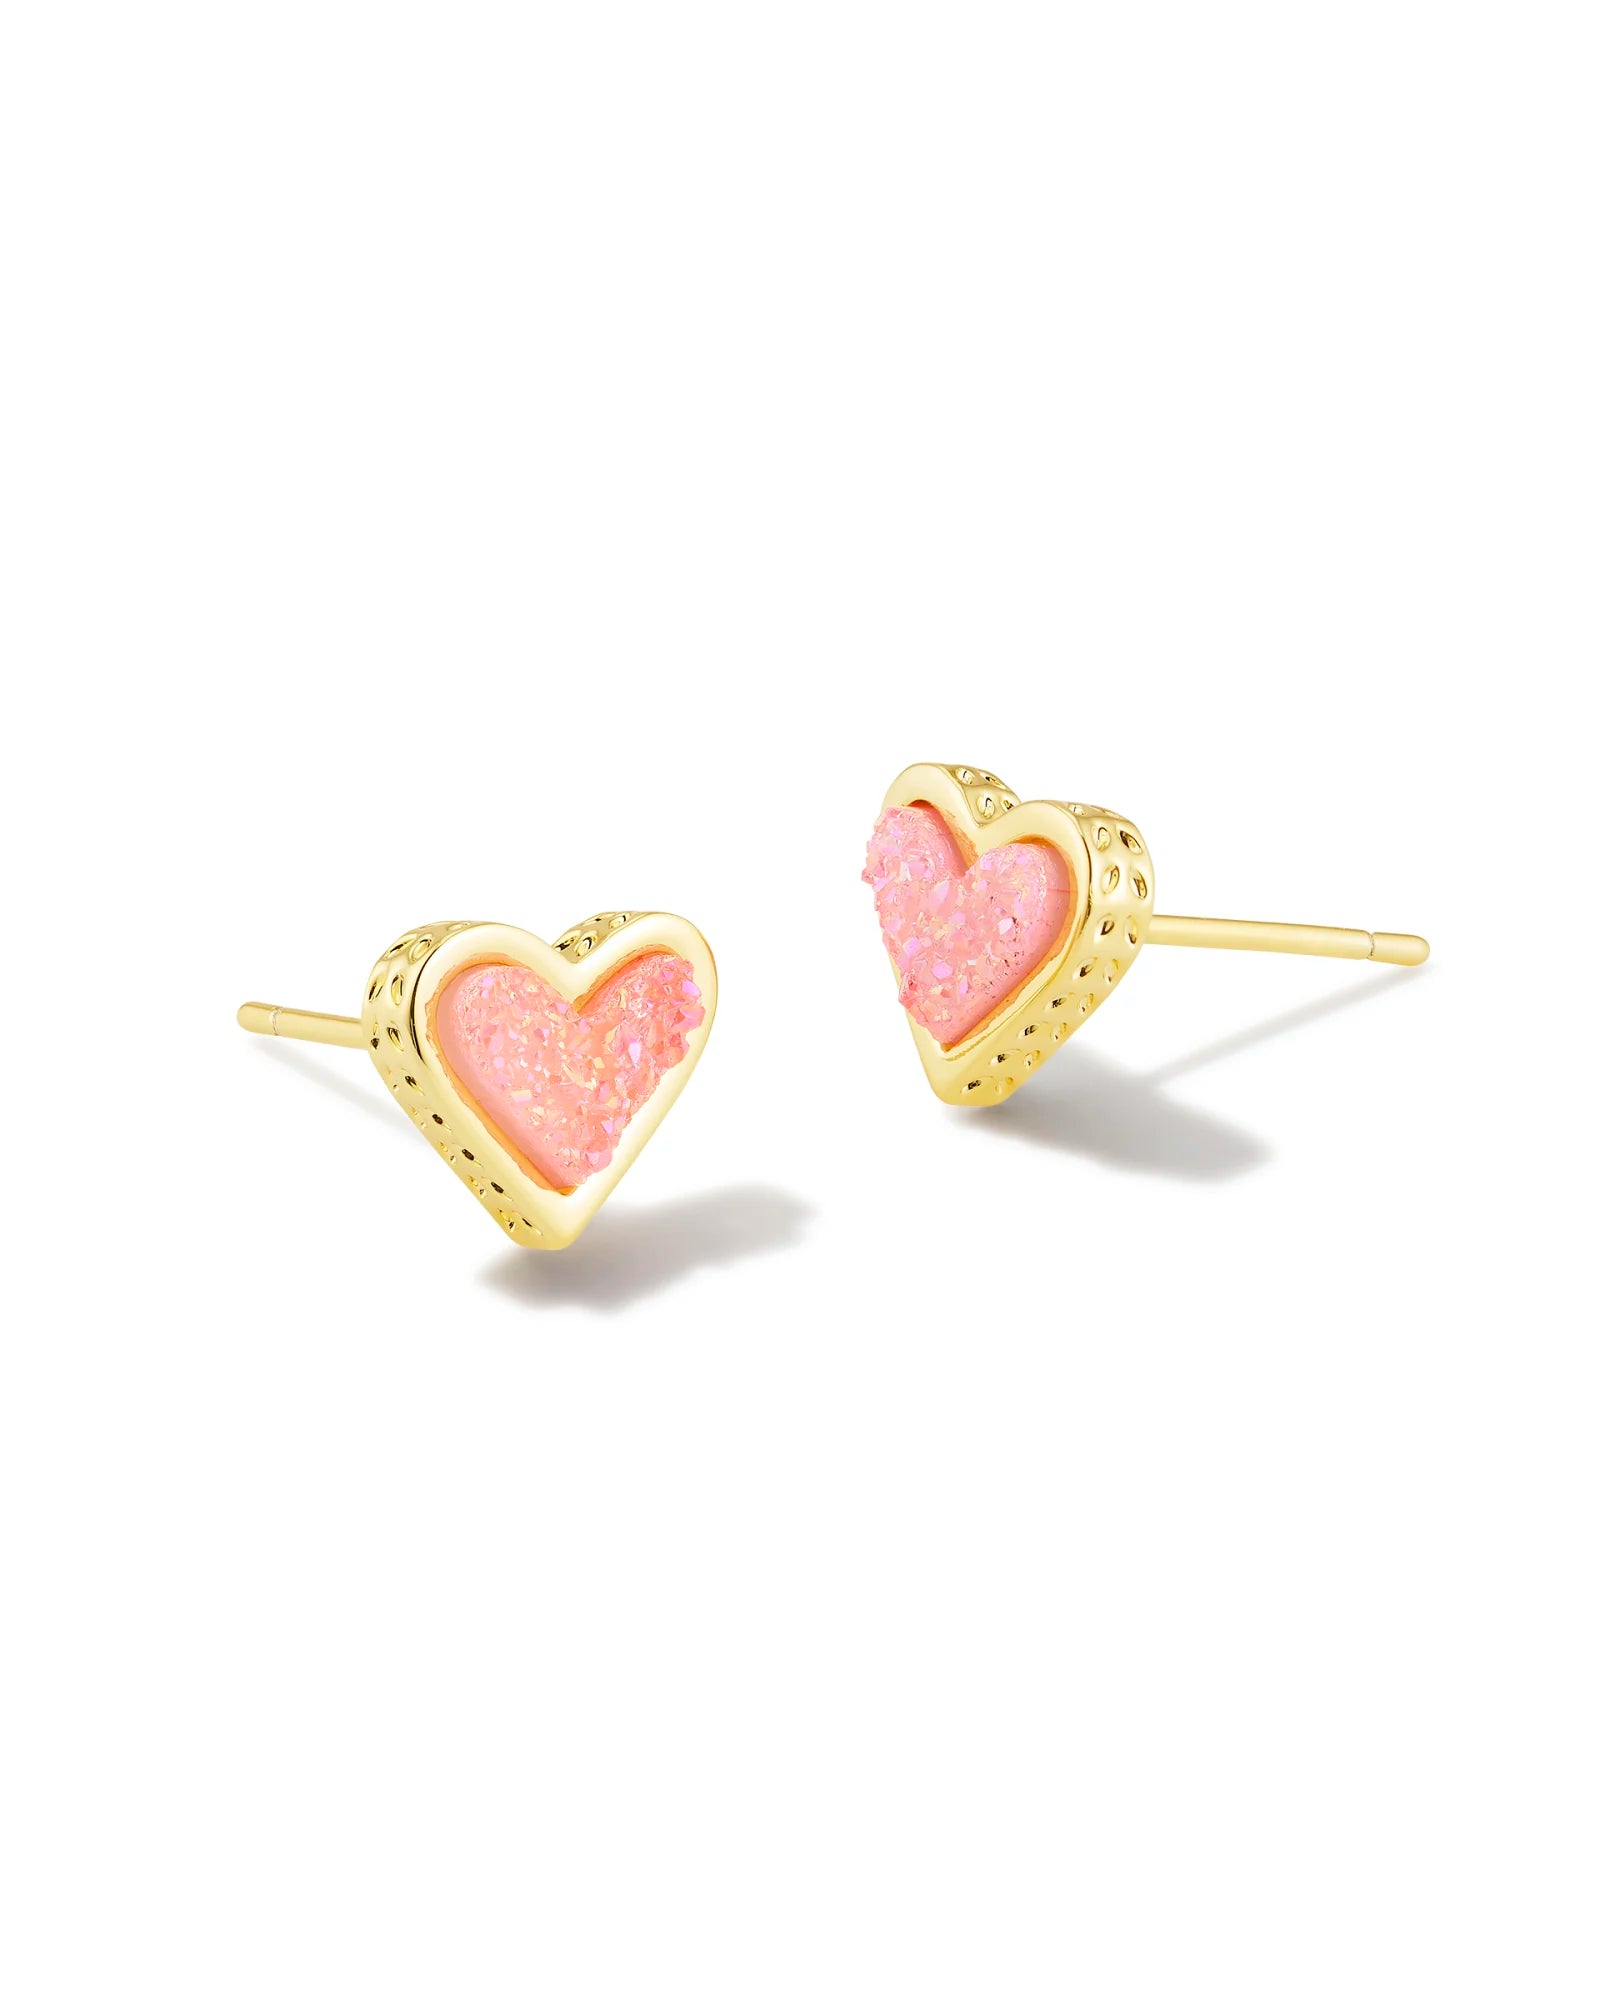 6ct Light Pink Diamond Pear Shape Drop Earrings – Rare Colors